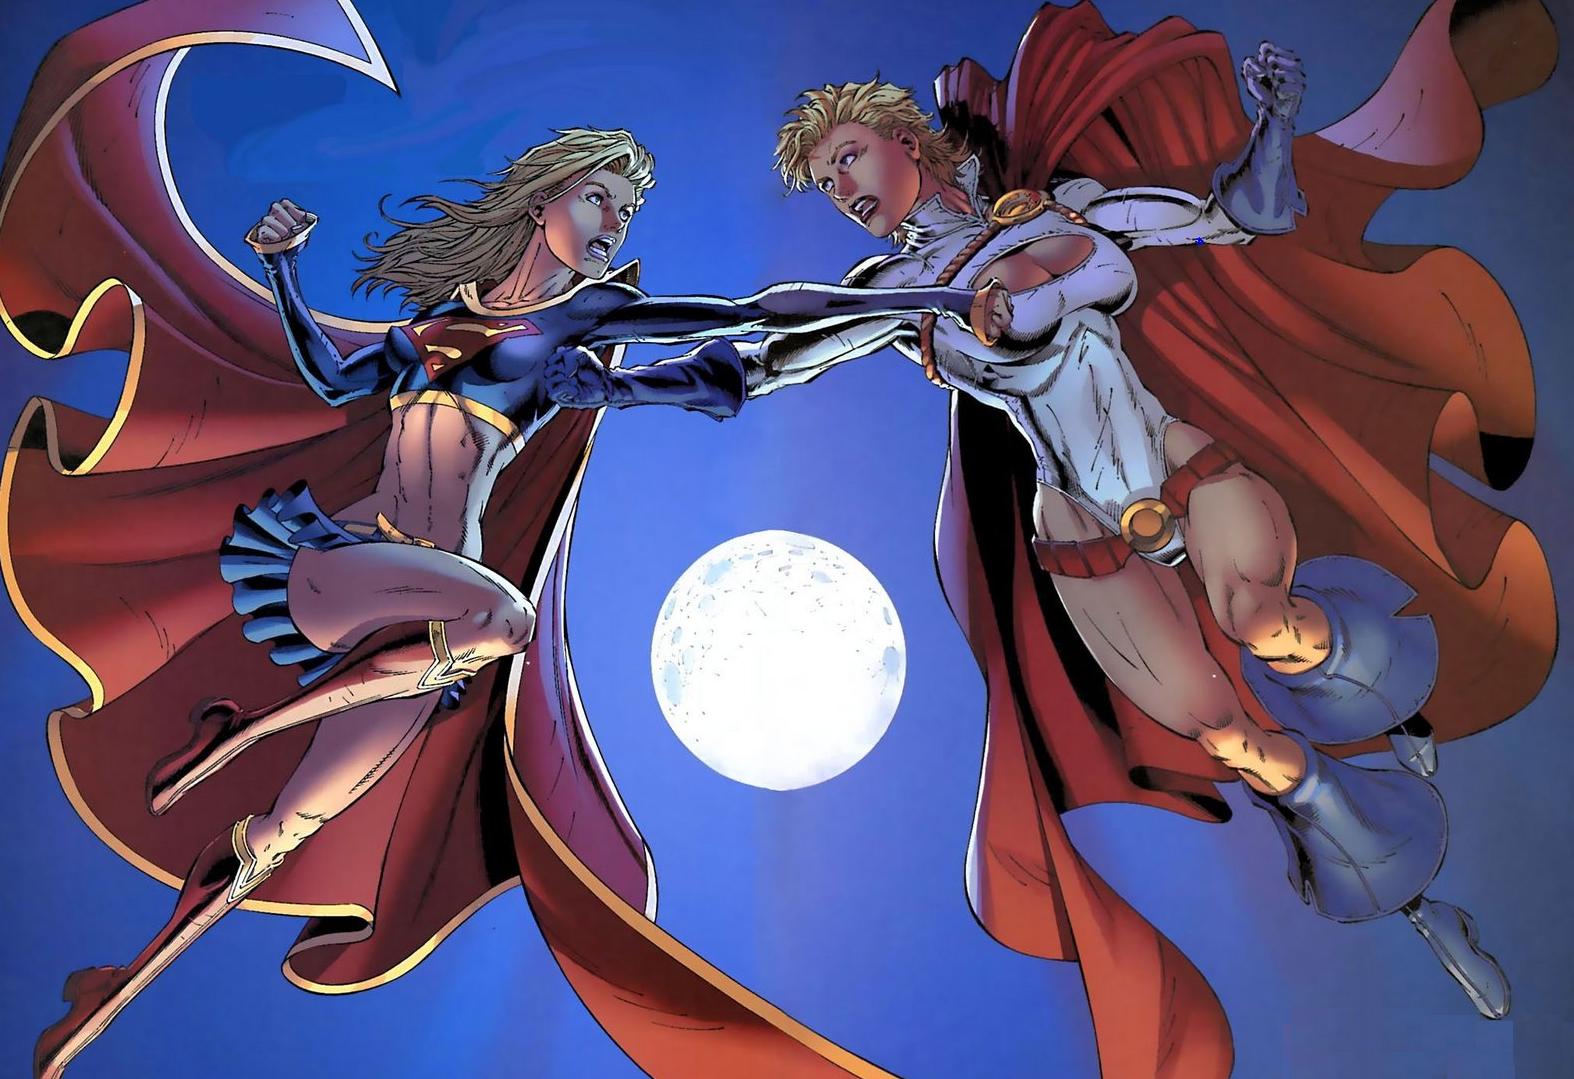 181791 Bild herunterladen comics, powergirl vs super mädchen, powergirl, super mädchen - Hintergrundbilder und Bildschirmschoner kostenlos